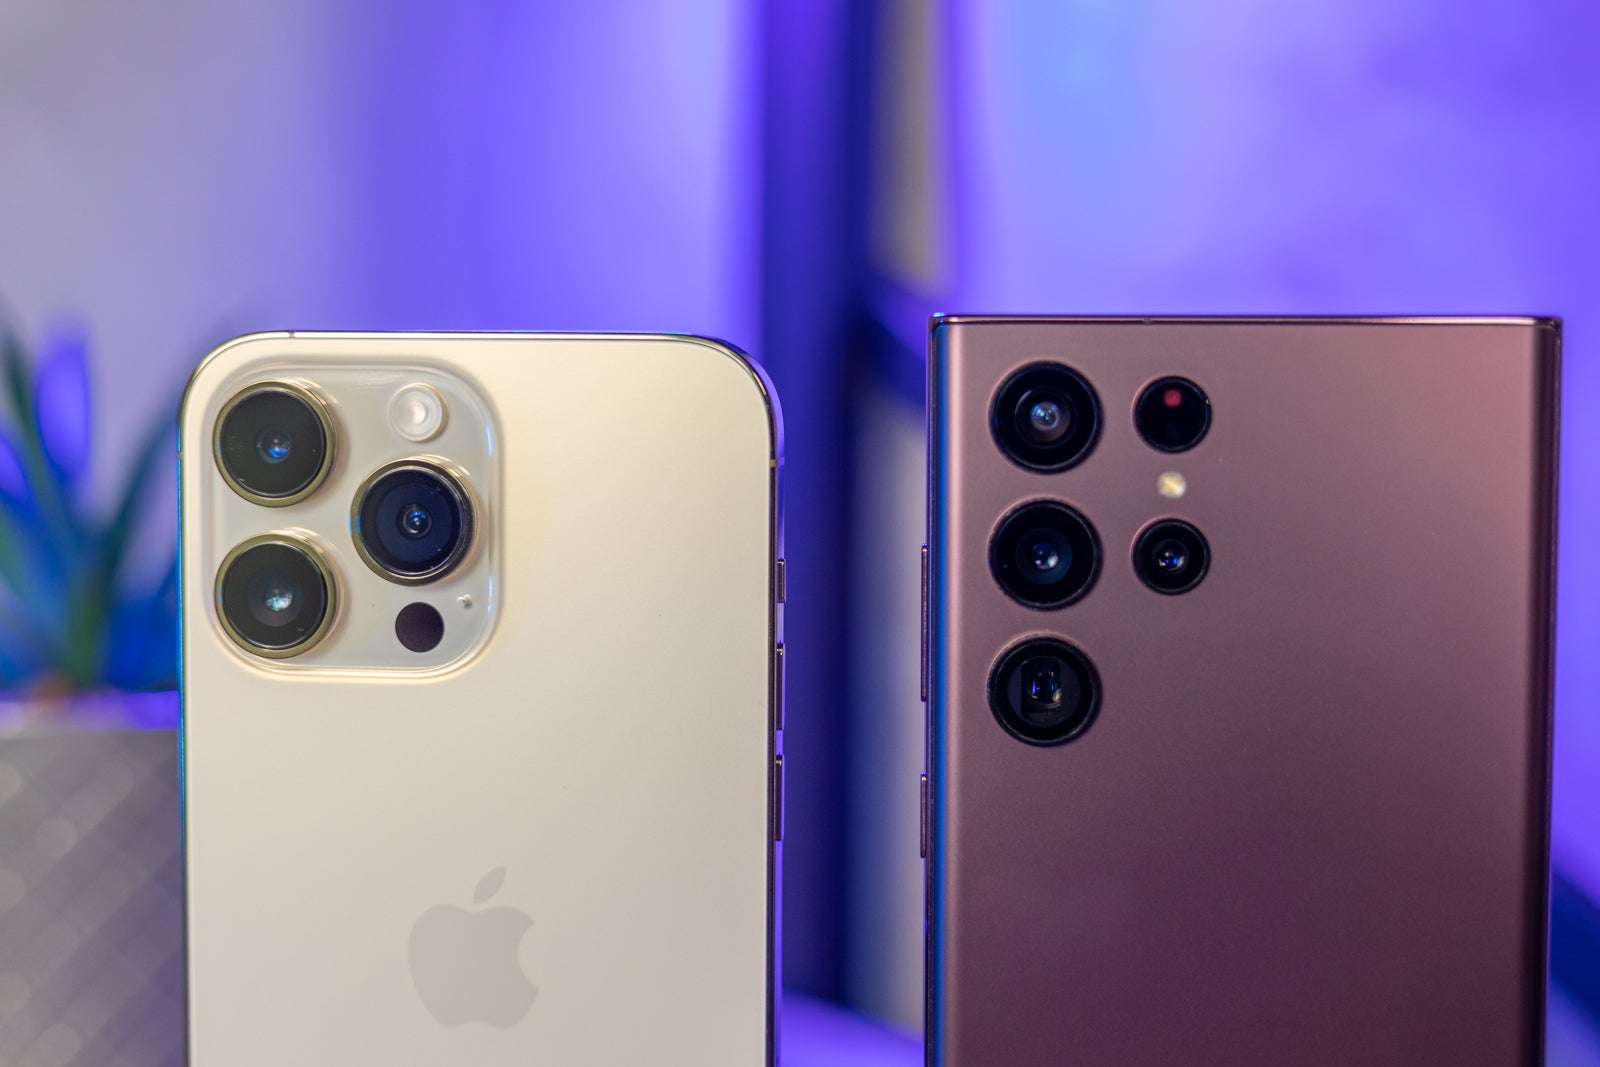 (Image Credit - PhoneArena) iPhone 14 Pro Max vs Galaxy S22 Ultra cameras - iPhone 14 Pro Max vs Samsung Galaxy S22 Ultra: comparison